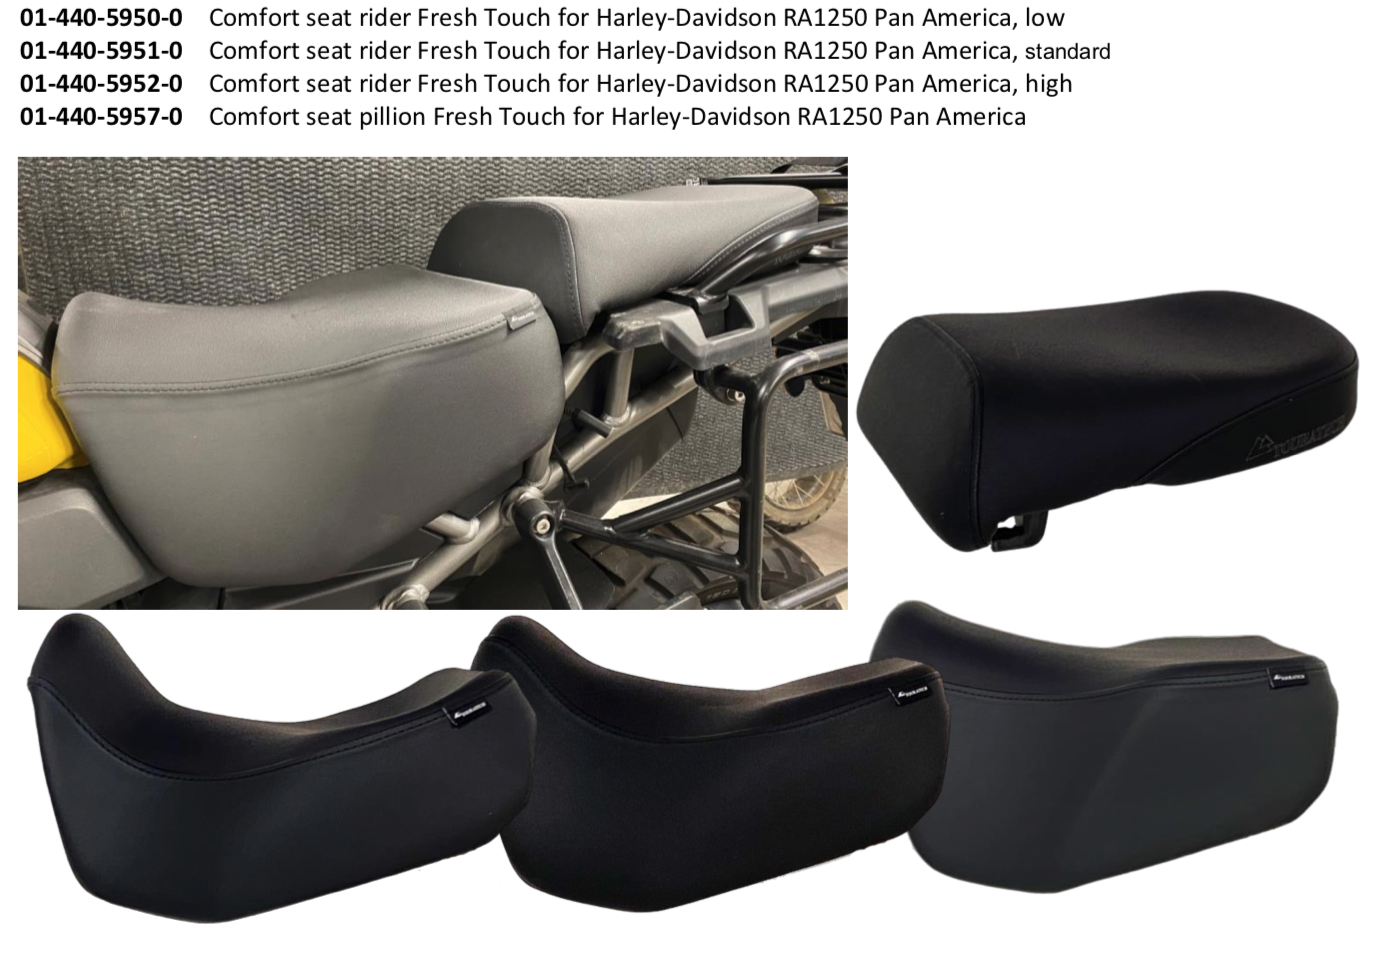 Comfort seat rider Fresh Touch Harley-Davidson RA1250 Pan America, high